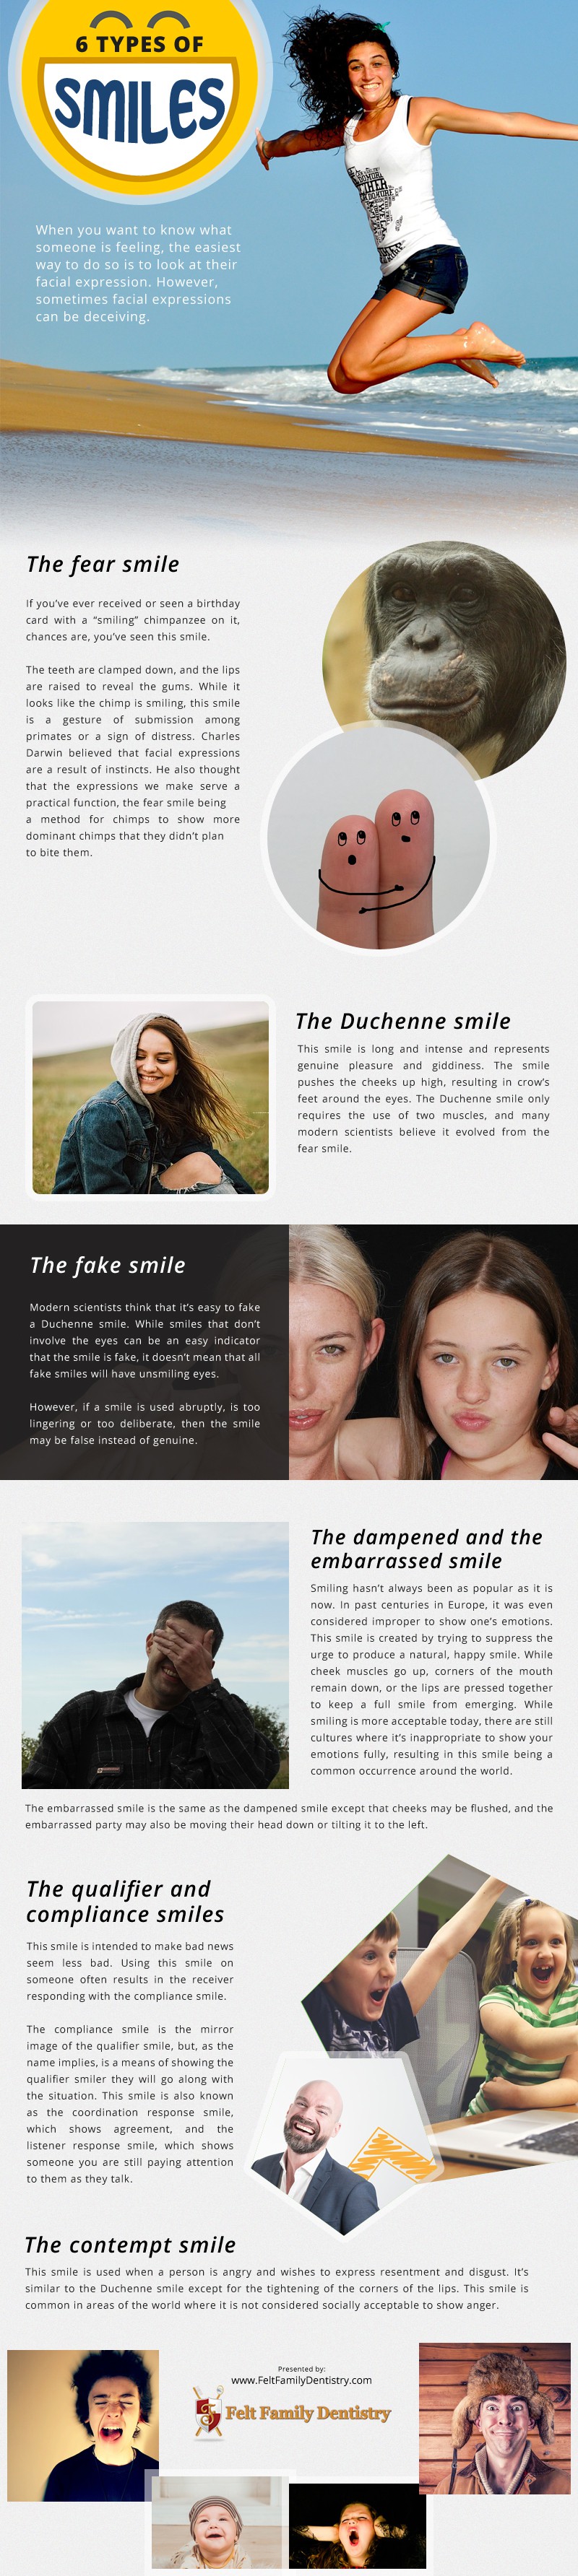 6 Types of Smiles [infographic]